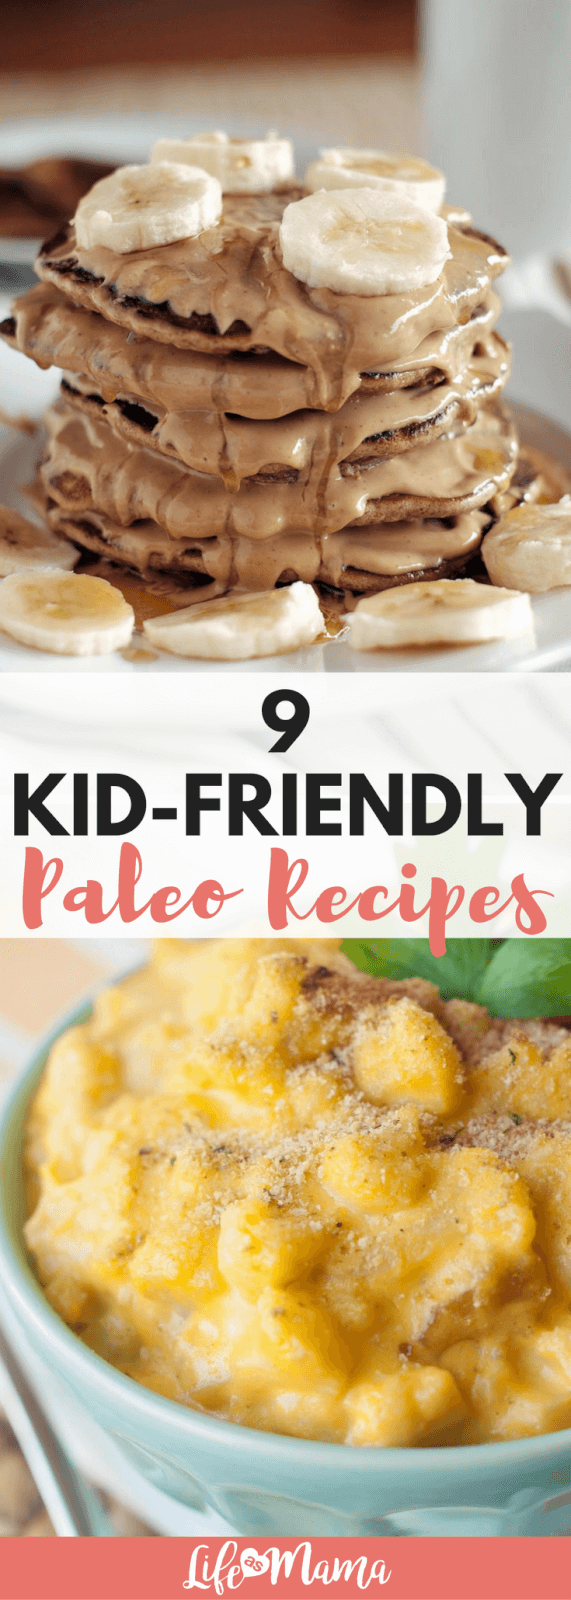 9 Kid-Friendly Paleo Recipes